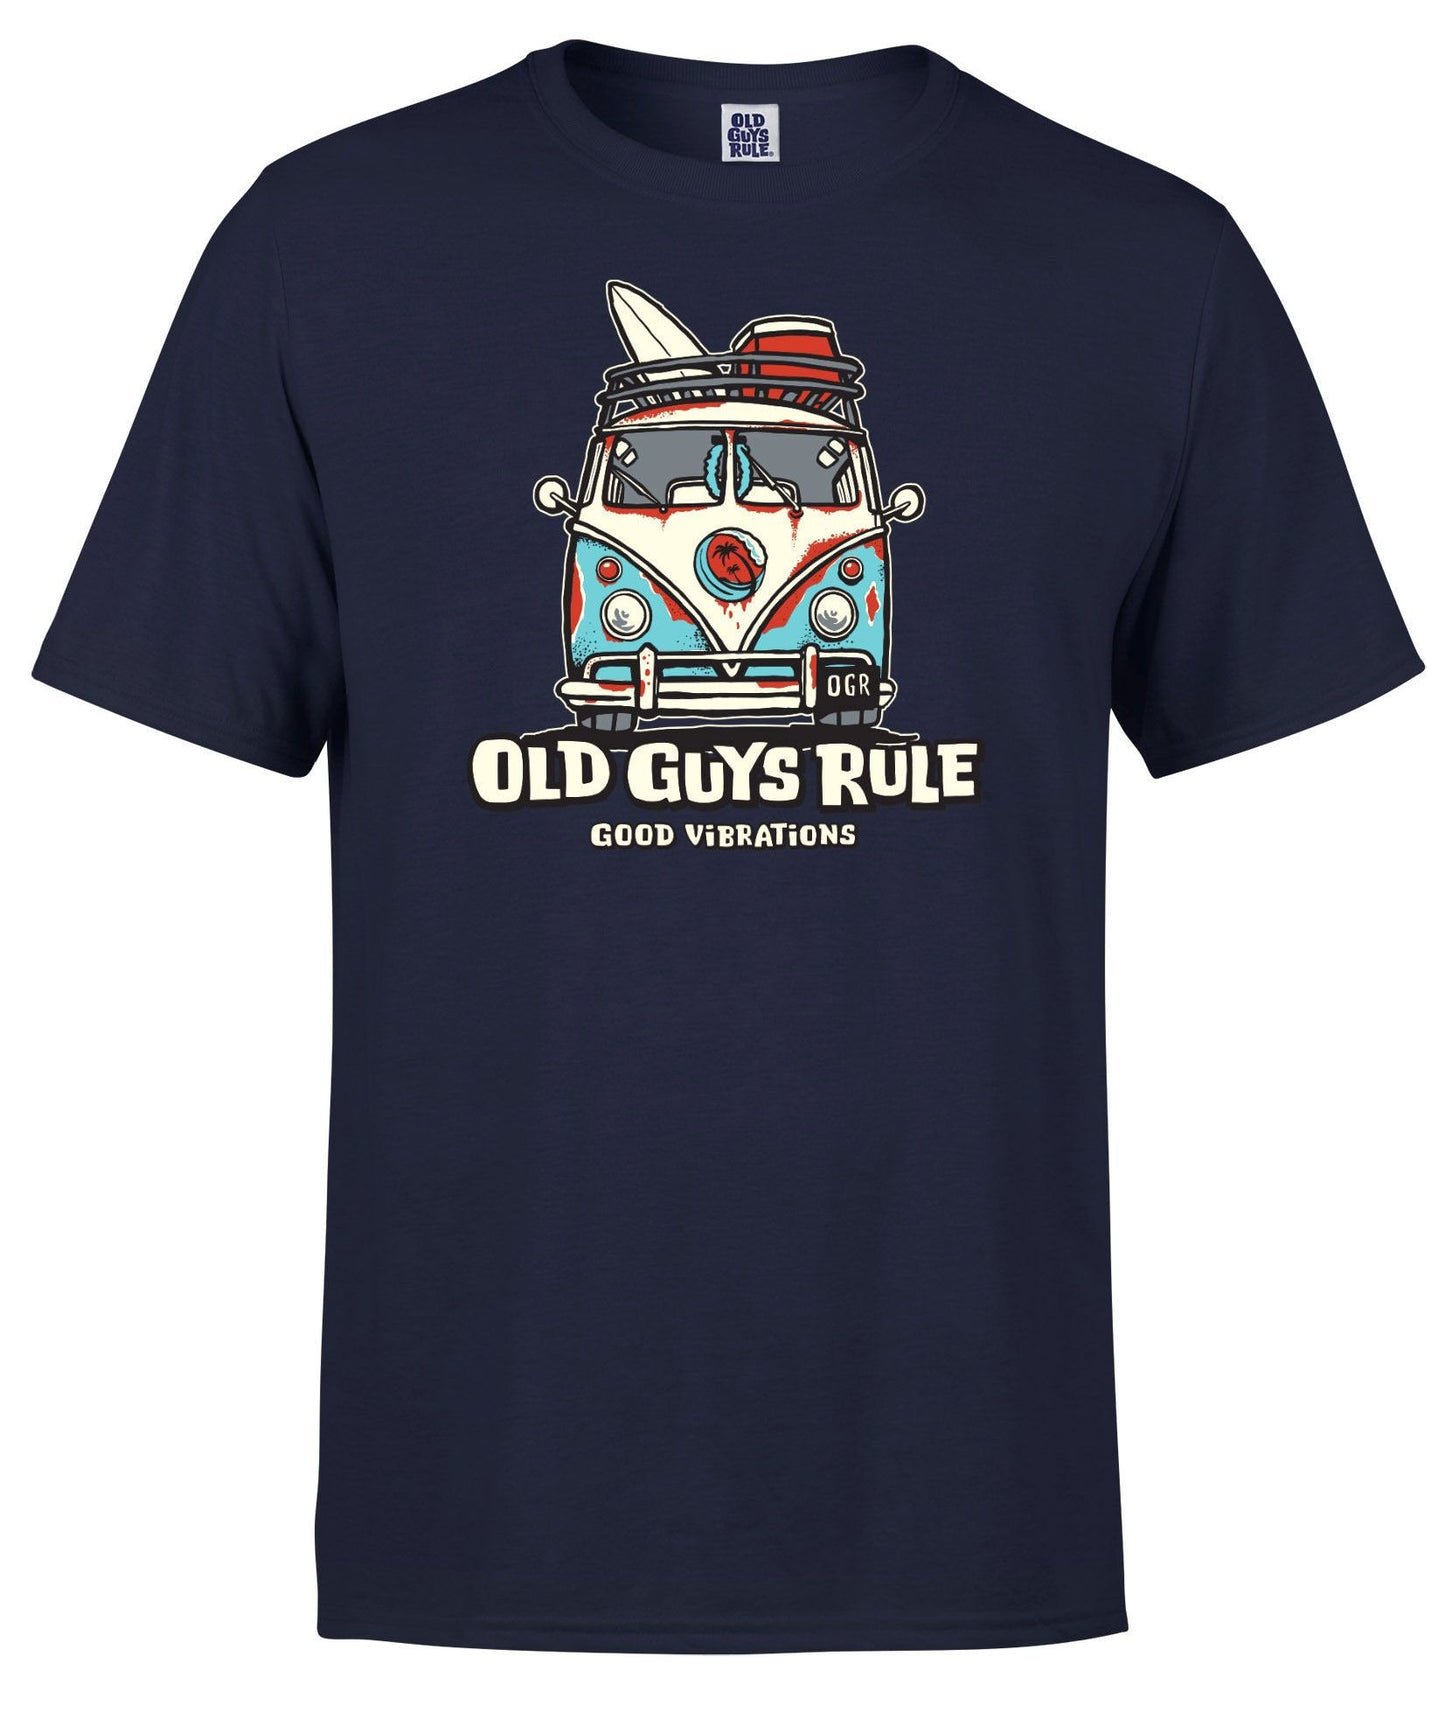 Old Guys Rule Mens 'Good Vibrations 3' Printed T-Shirt - Navy